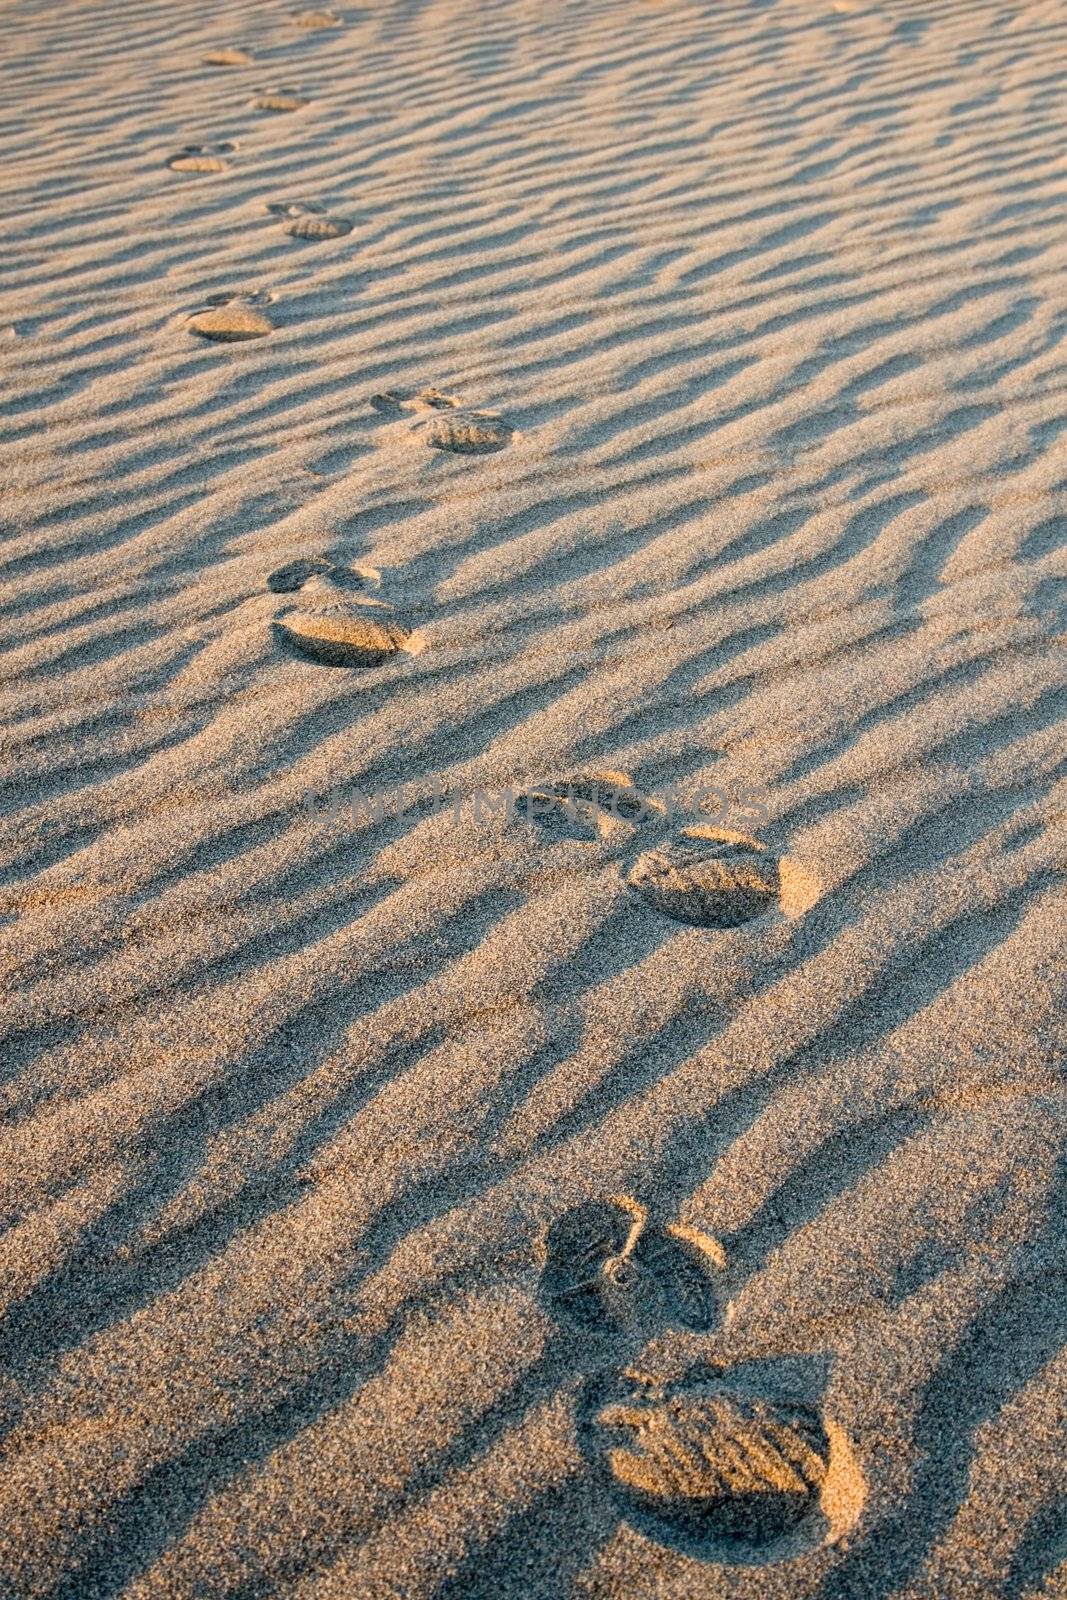 Footprints in the desert or beach sand